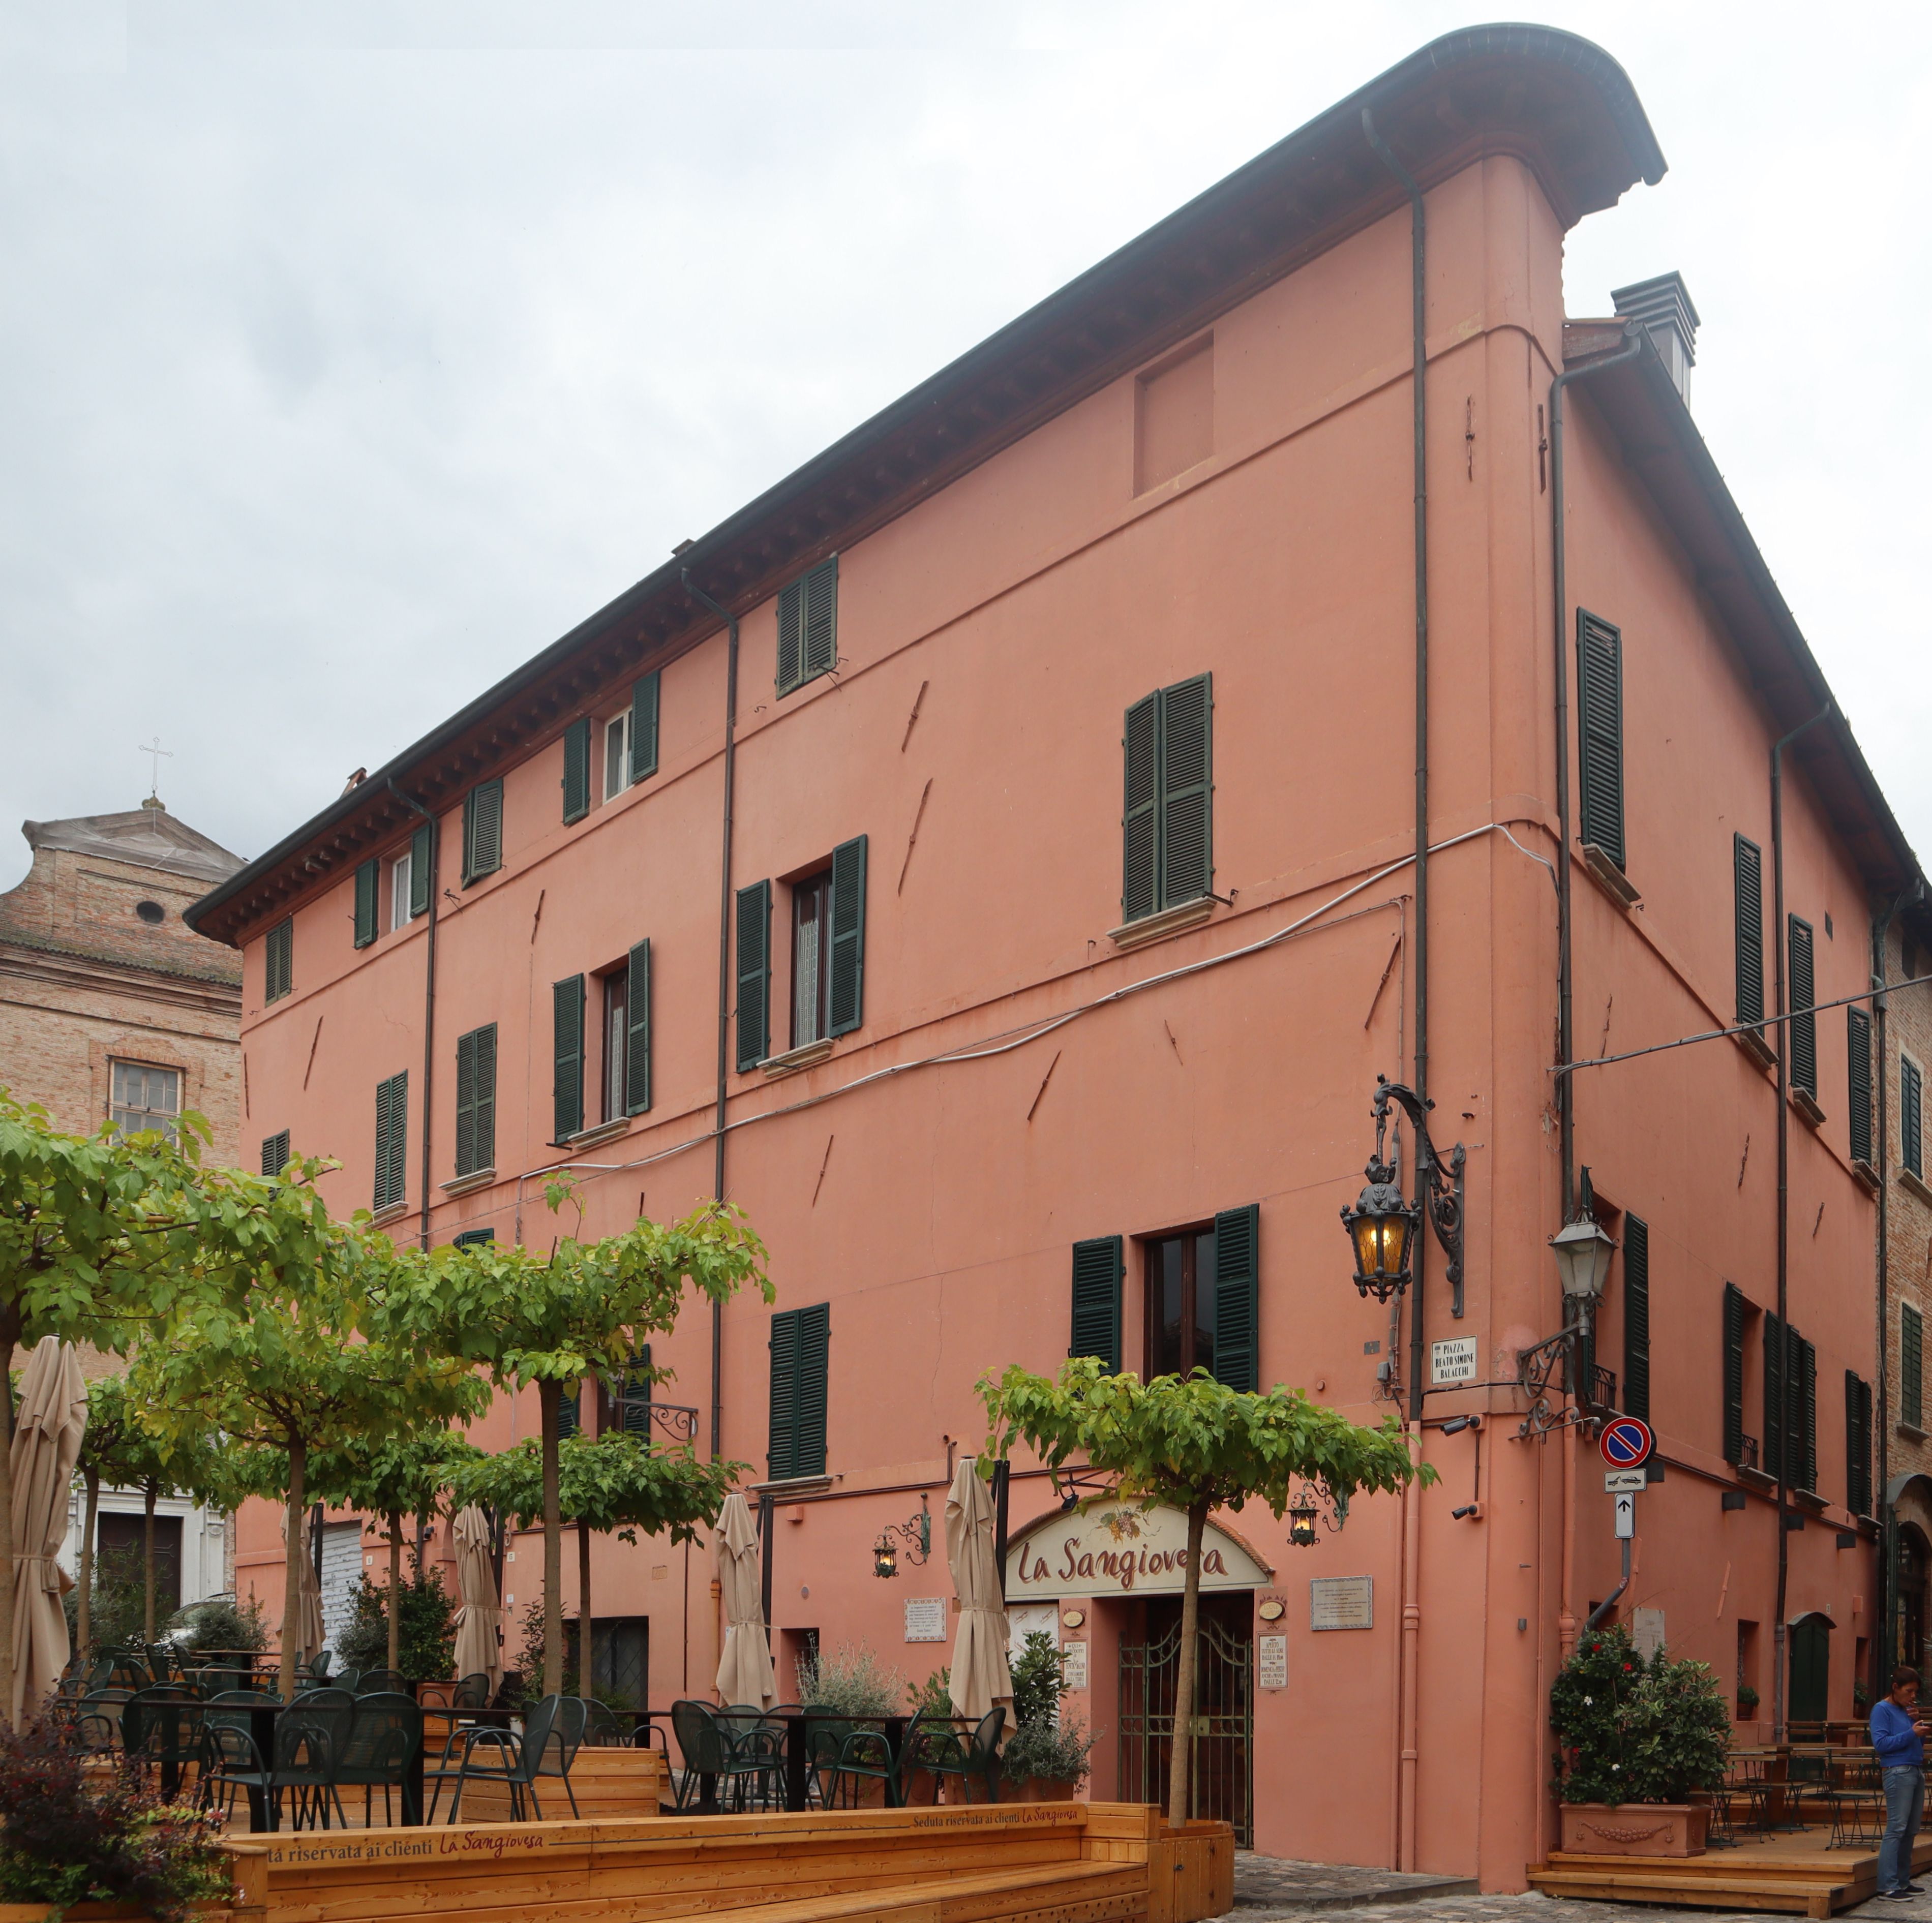 Palazzo Balacchi in Santarcangelo